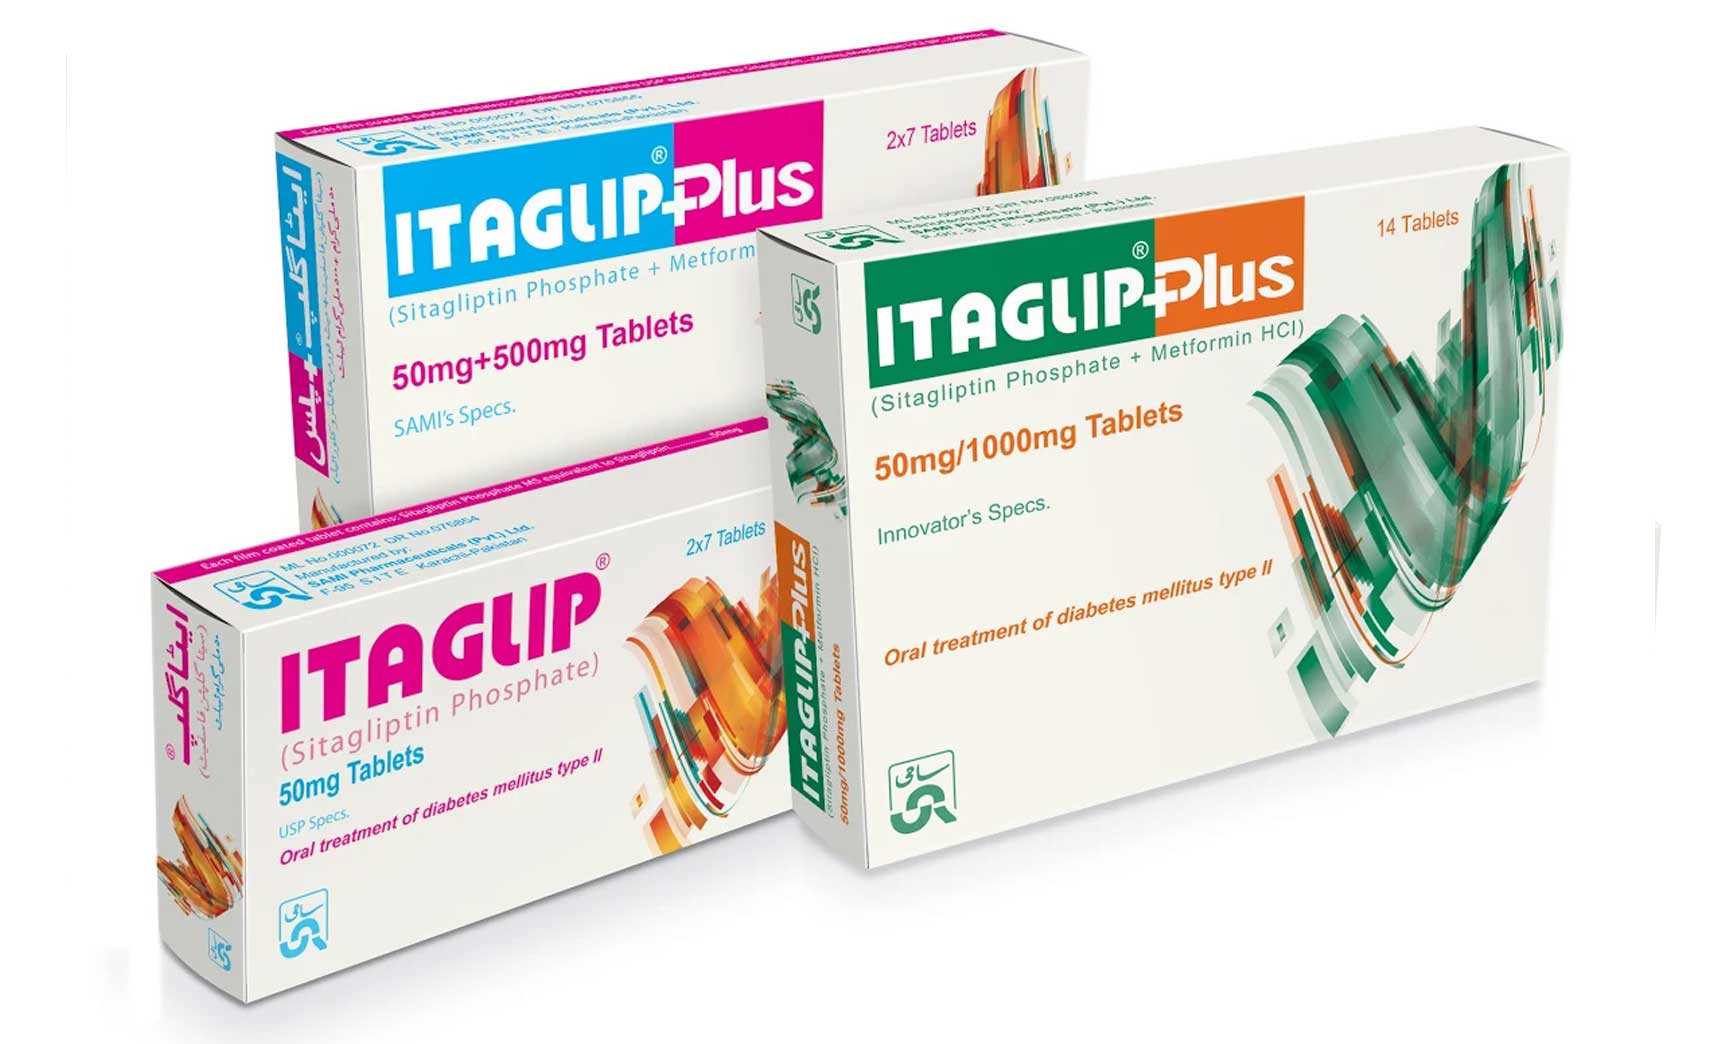 ITAGLIP® Plus (Sitagliptin Phosphate + Metformin HCl) is also made .